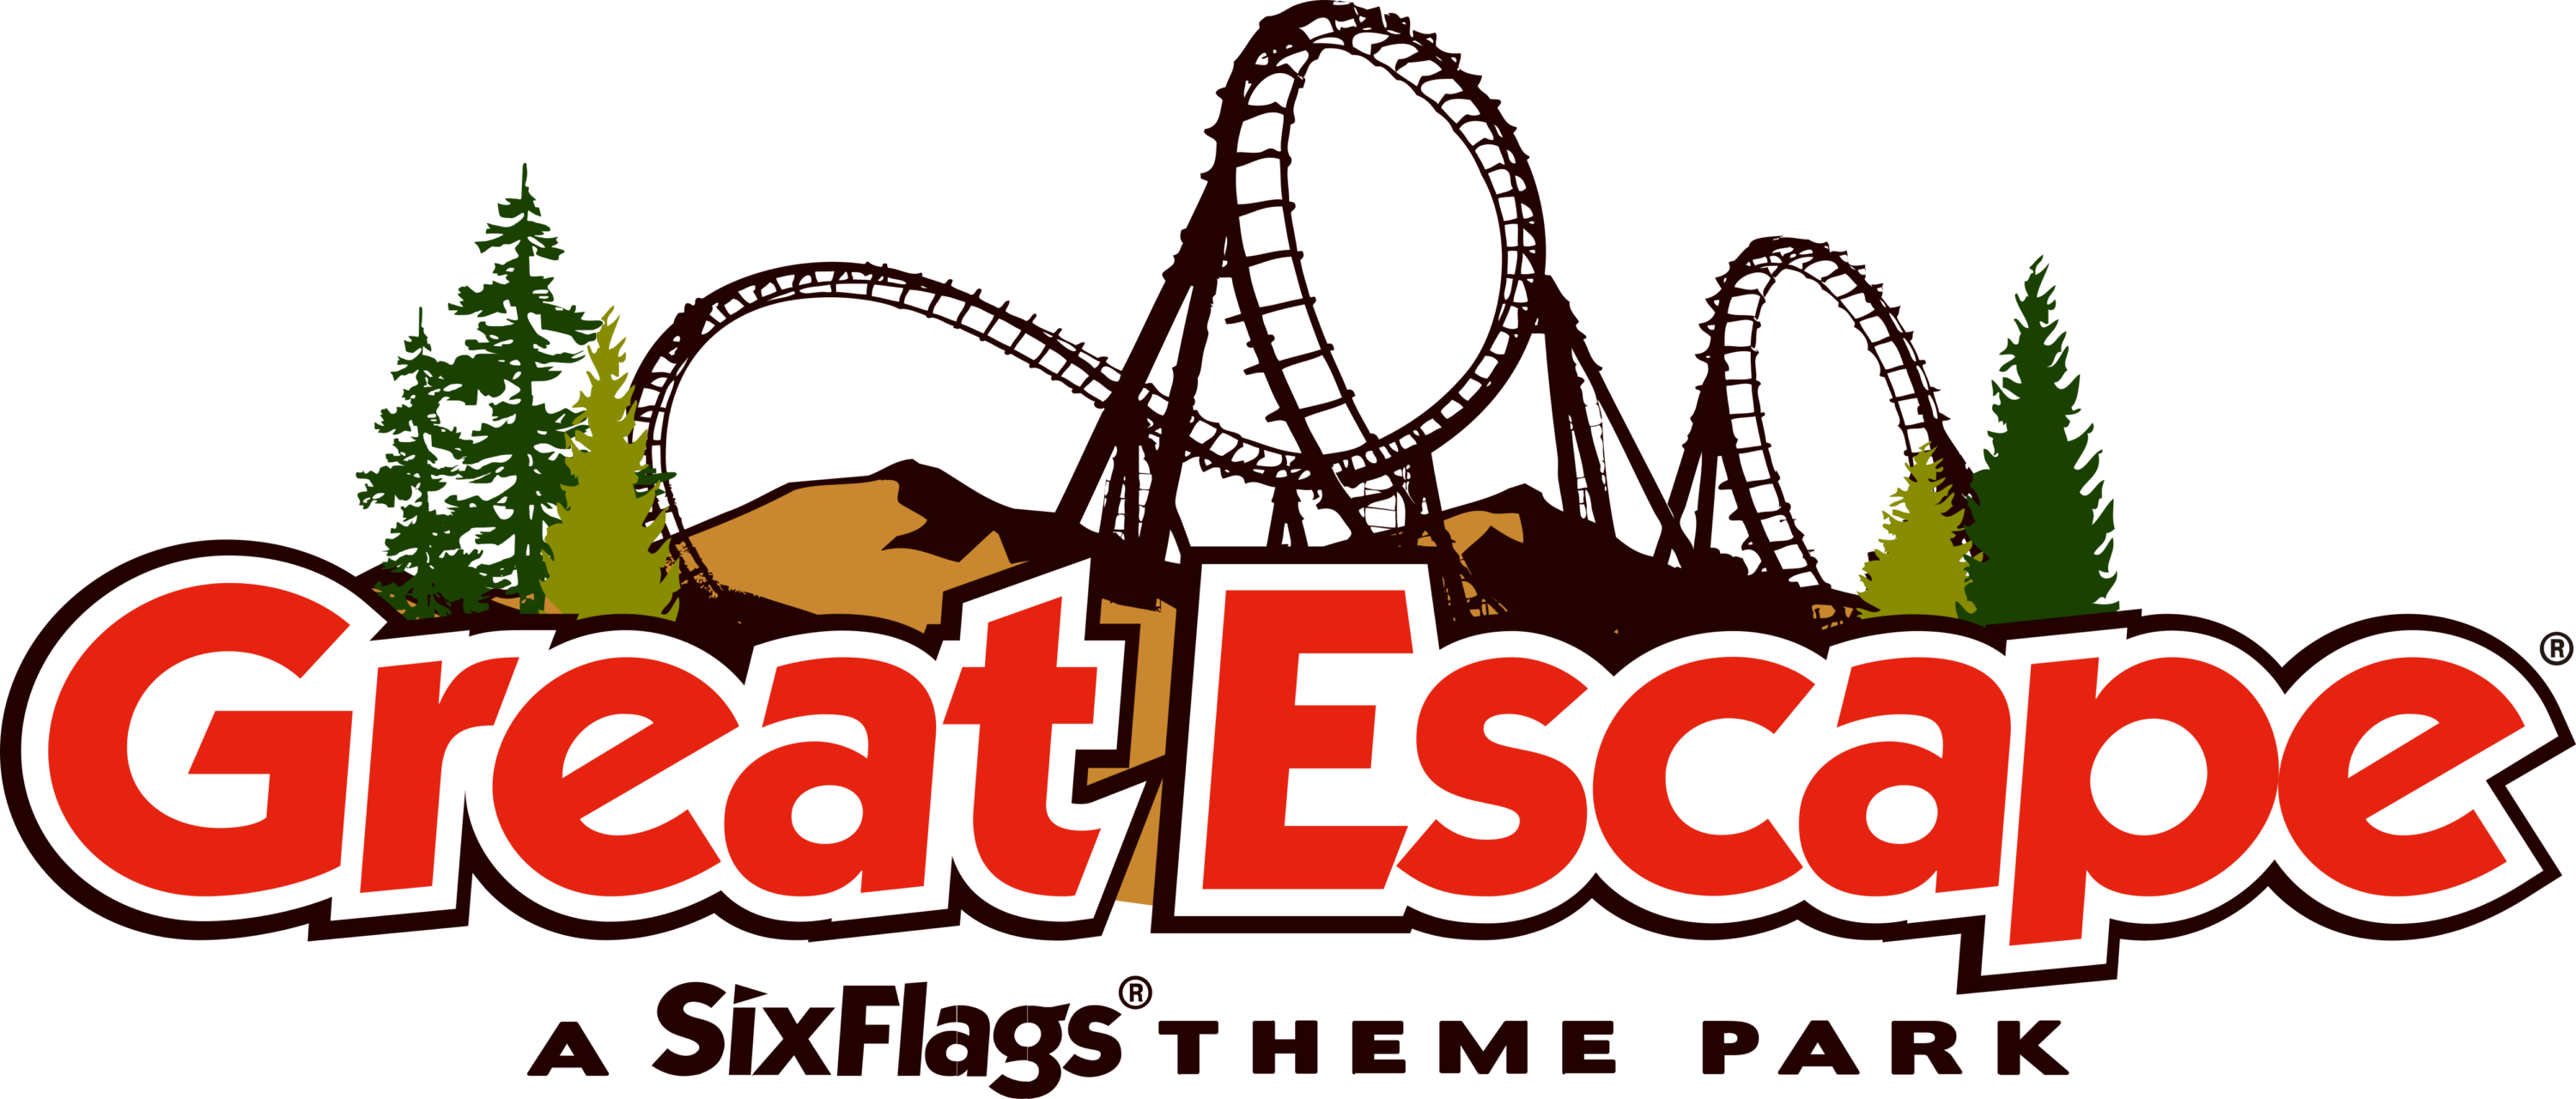 Six Flags Great Escape Logo